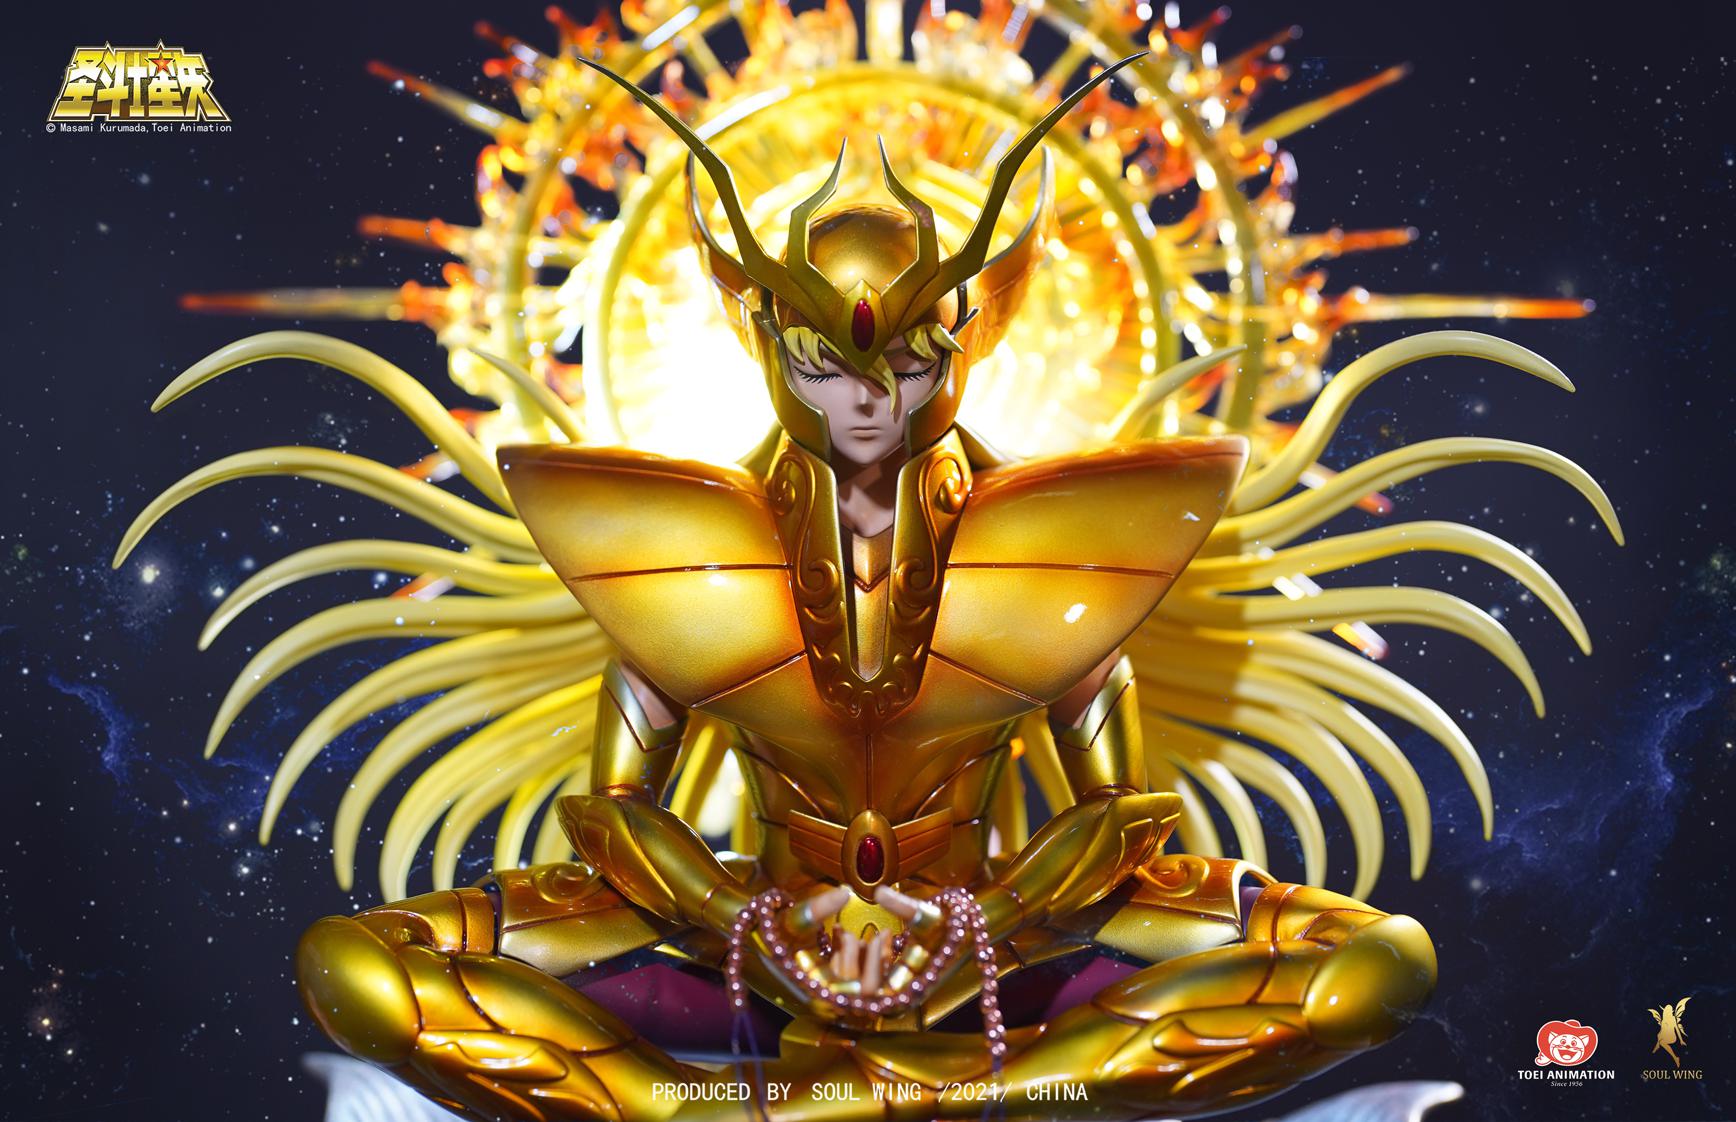 Mucho Asistencia Pantano Saint Seiya - Gold Myth Cloth - Virgo Shaka Deluxe Special Version 1/4 -  Spec Fiction Shop